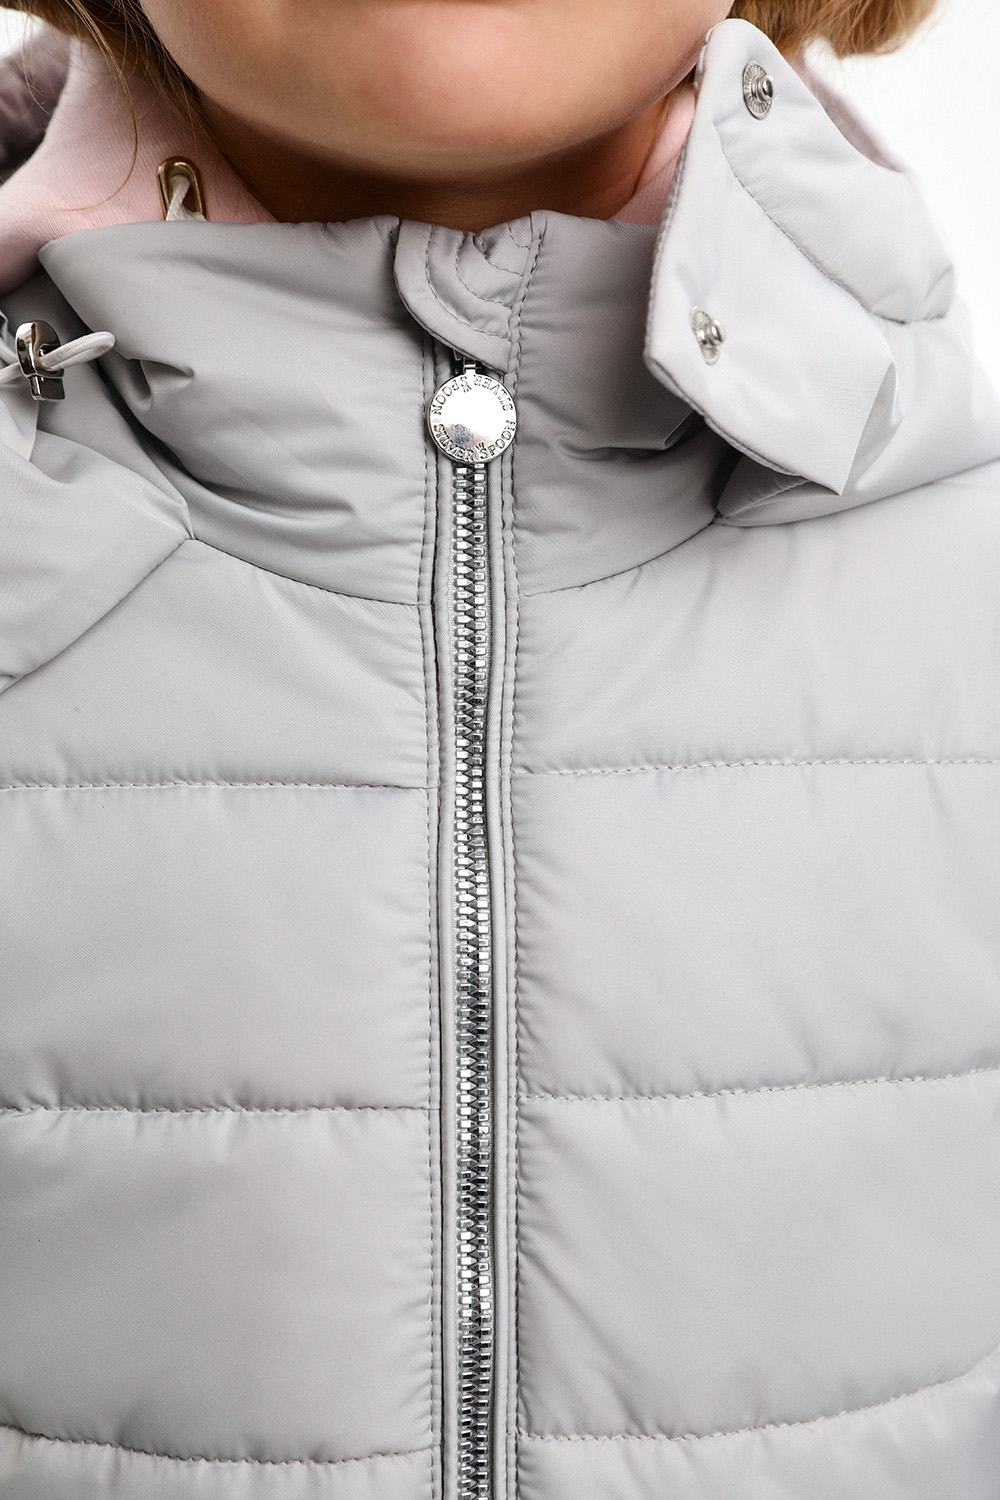 Утепленное пальто с капюшоном (SULWG-326-20310-801) Silver spoon